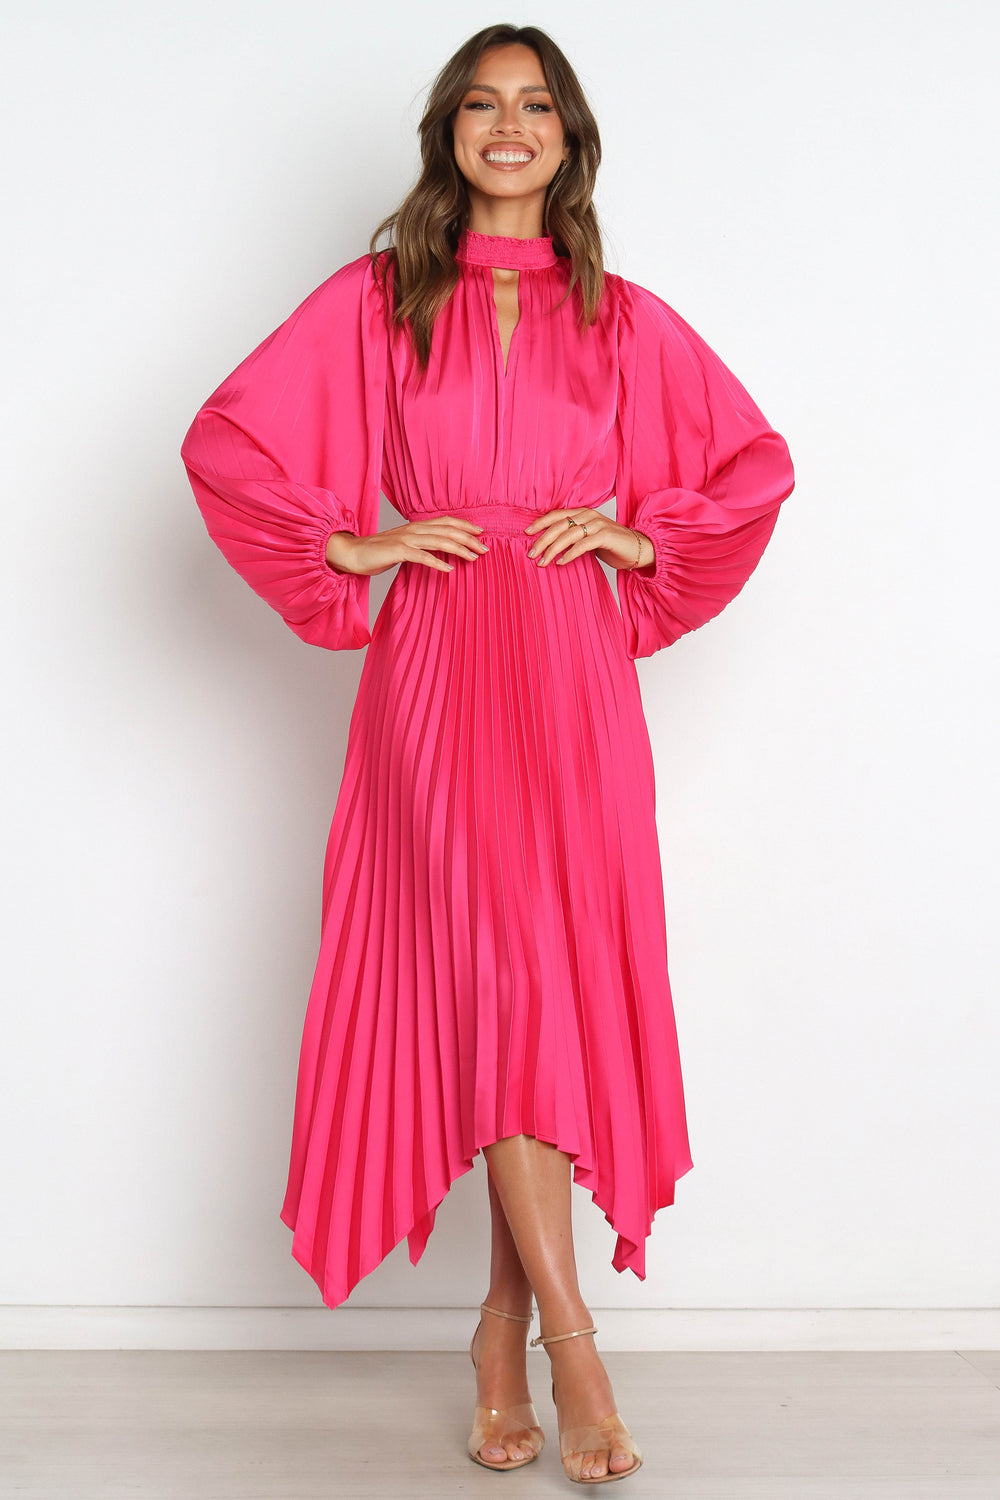 DRESSES @Eloise Dress - Pink